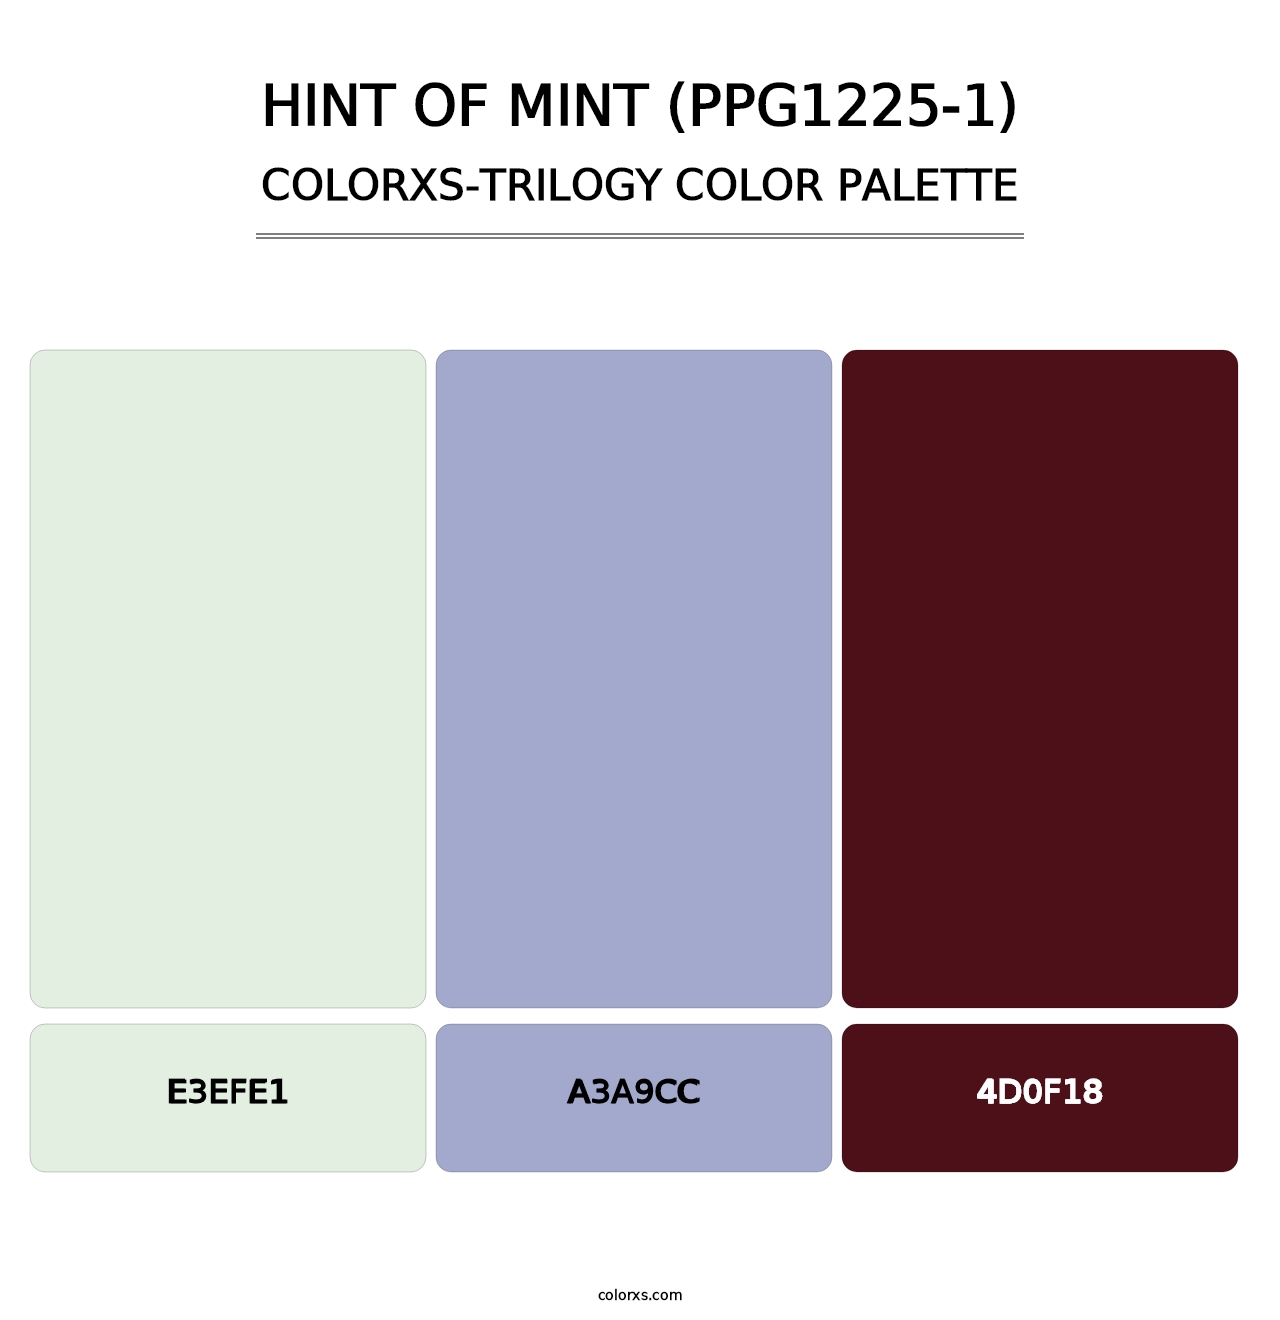 Hint Of Mint (PPG1225-1) - Colorxs Trilogy Palette